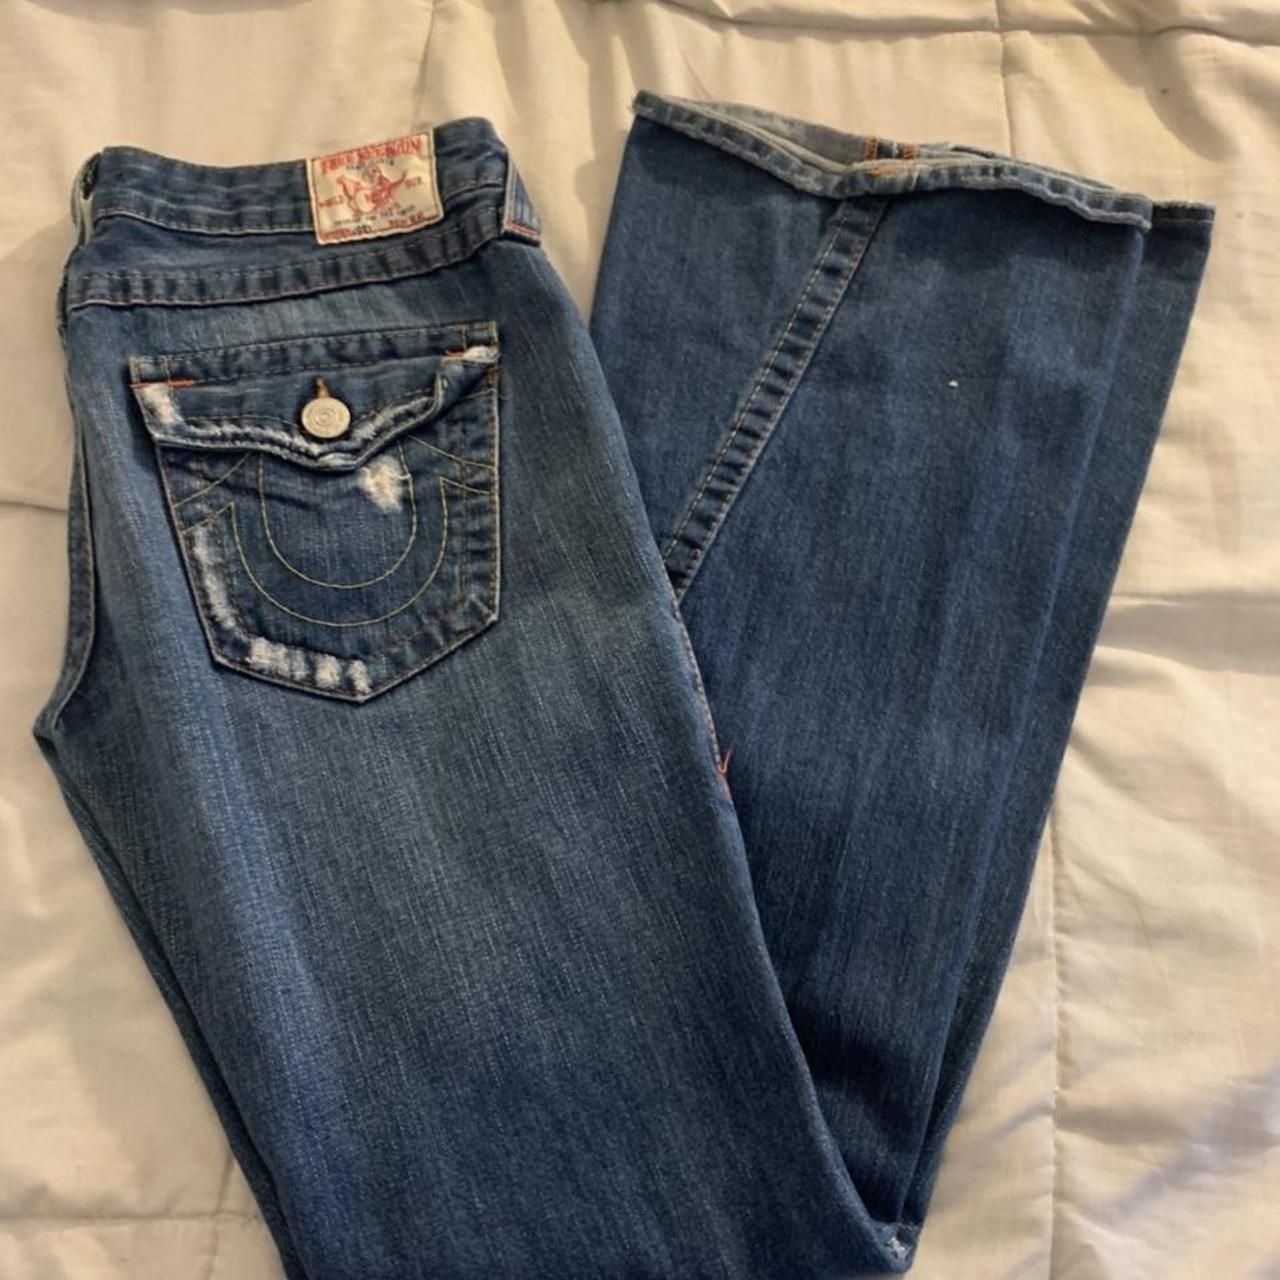 true religion jeans size 29 super nice fitting - Depop